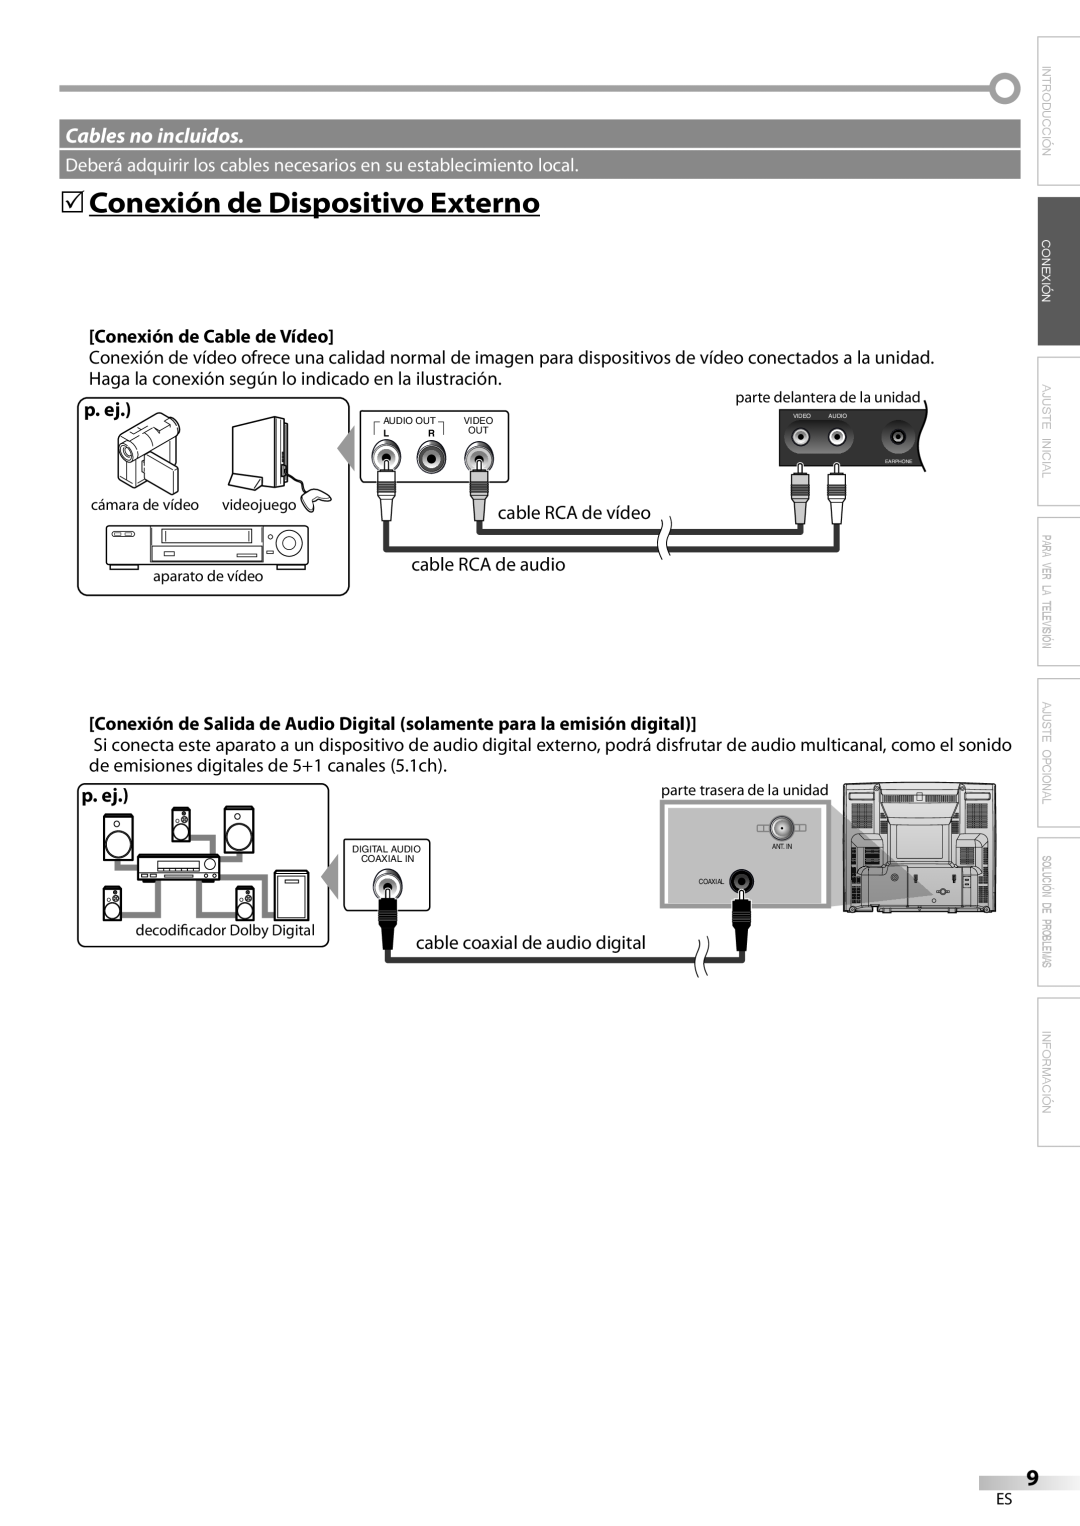 FUNAI CR130DR8 owner manual 5Conexión de Dispositivo Externo, Cables no incluidos, p. ej, Conexión de Cable de Vídeo 